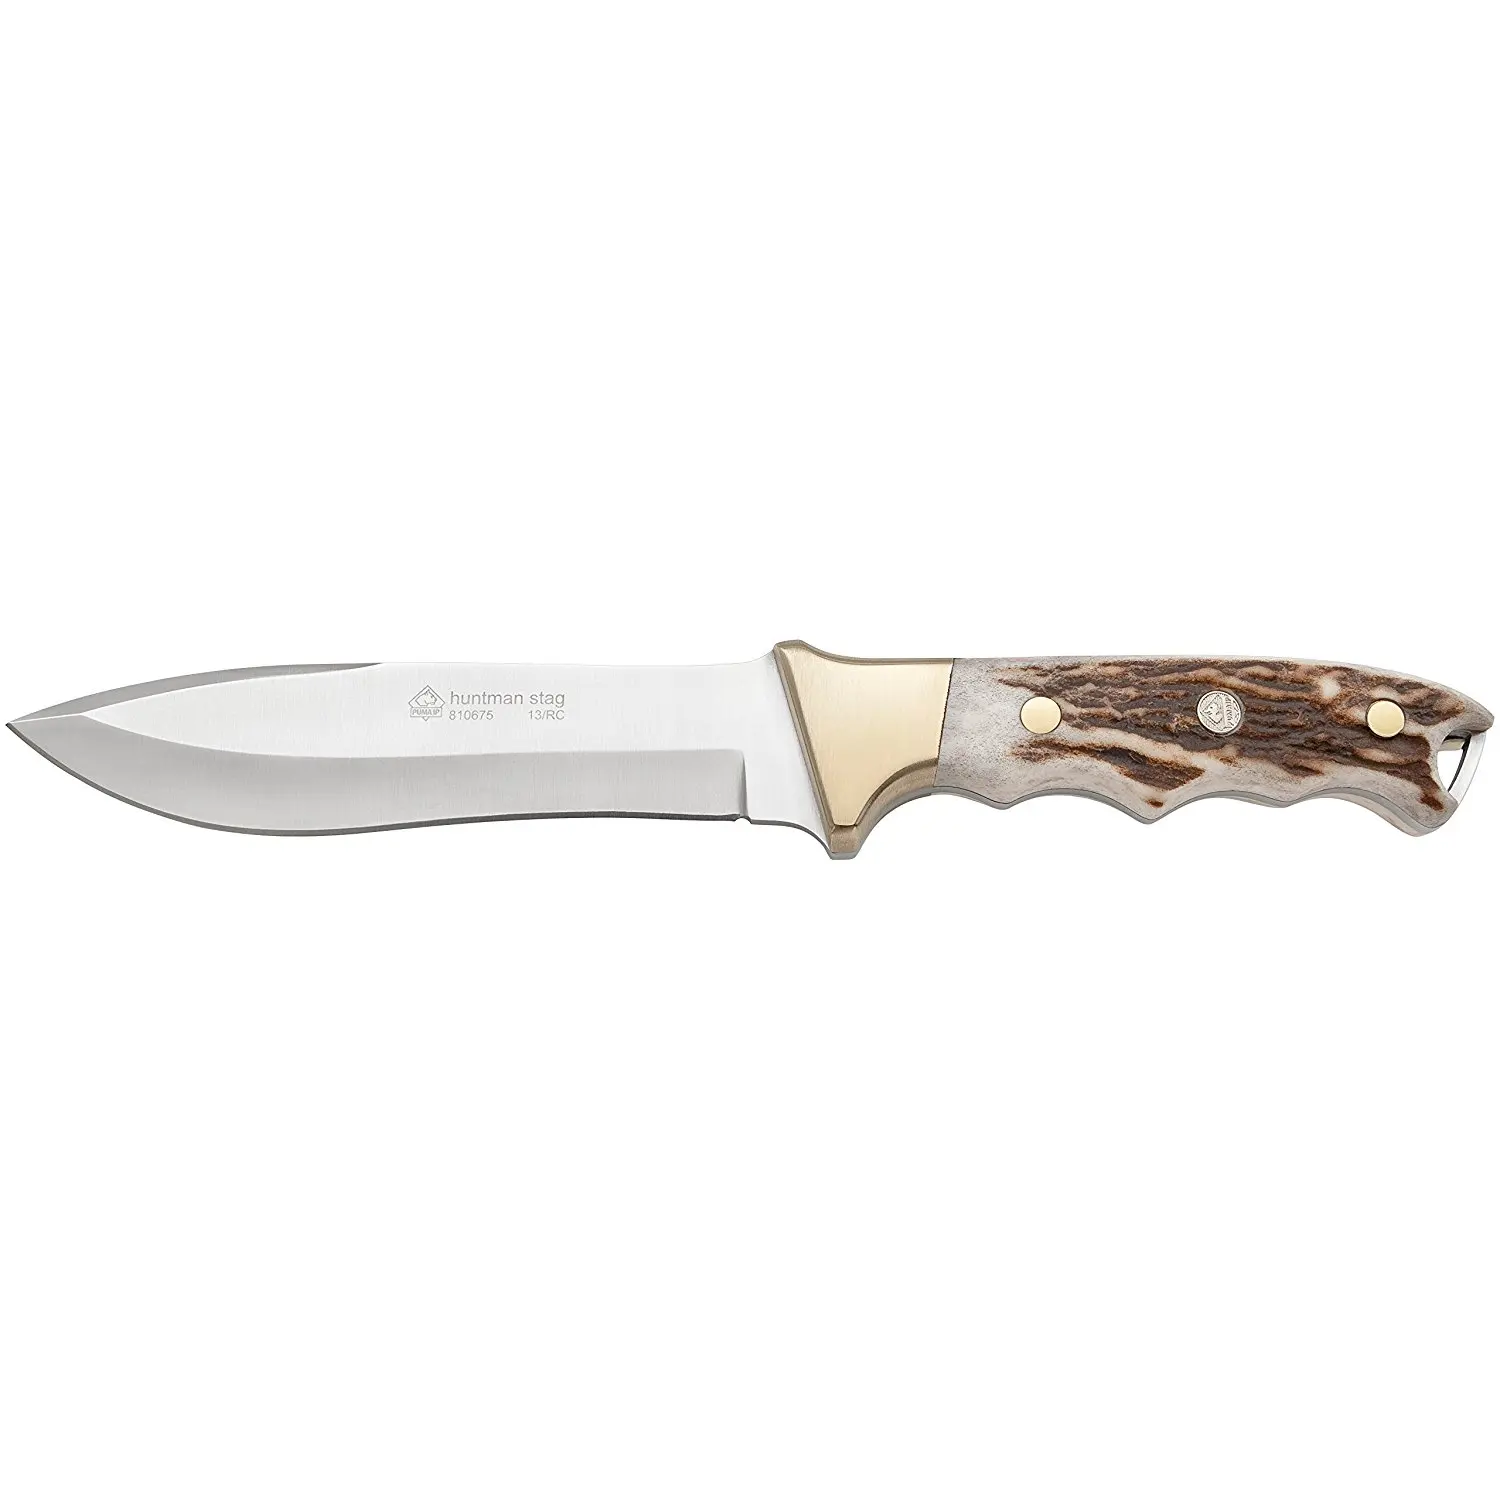 puma stockman pocket knife